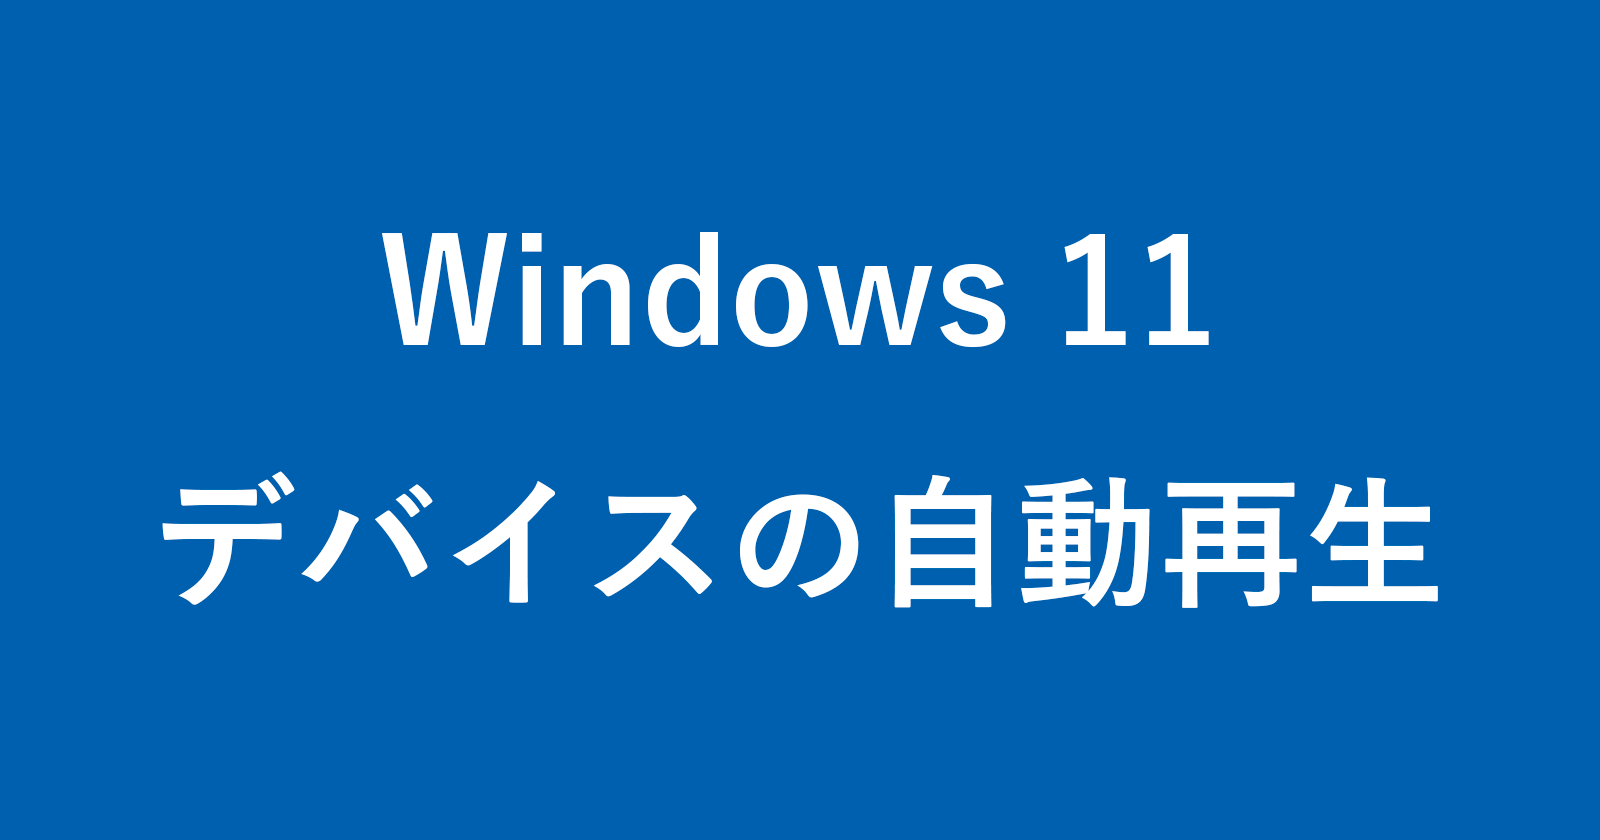 windows 11 autoplay